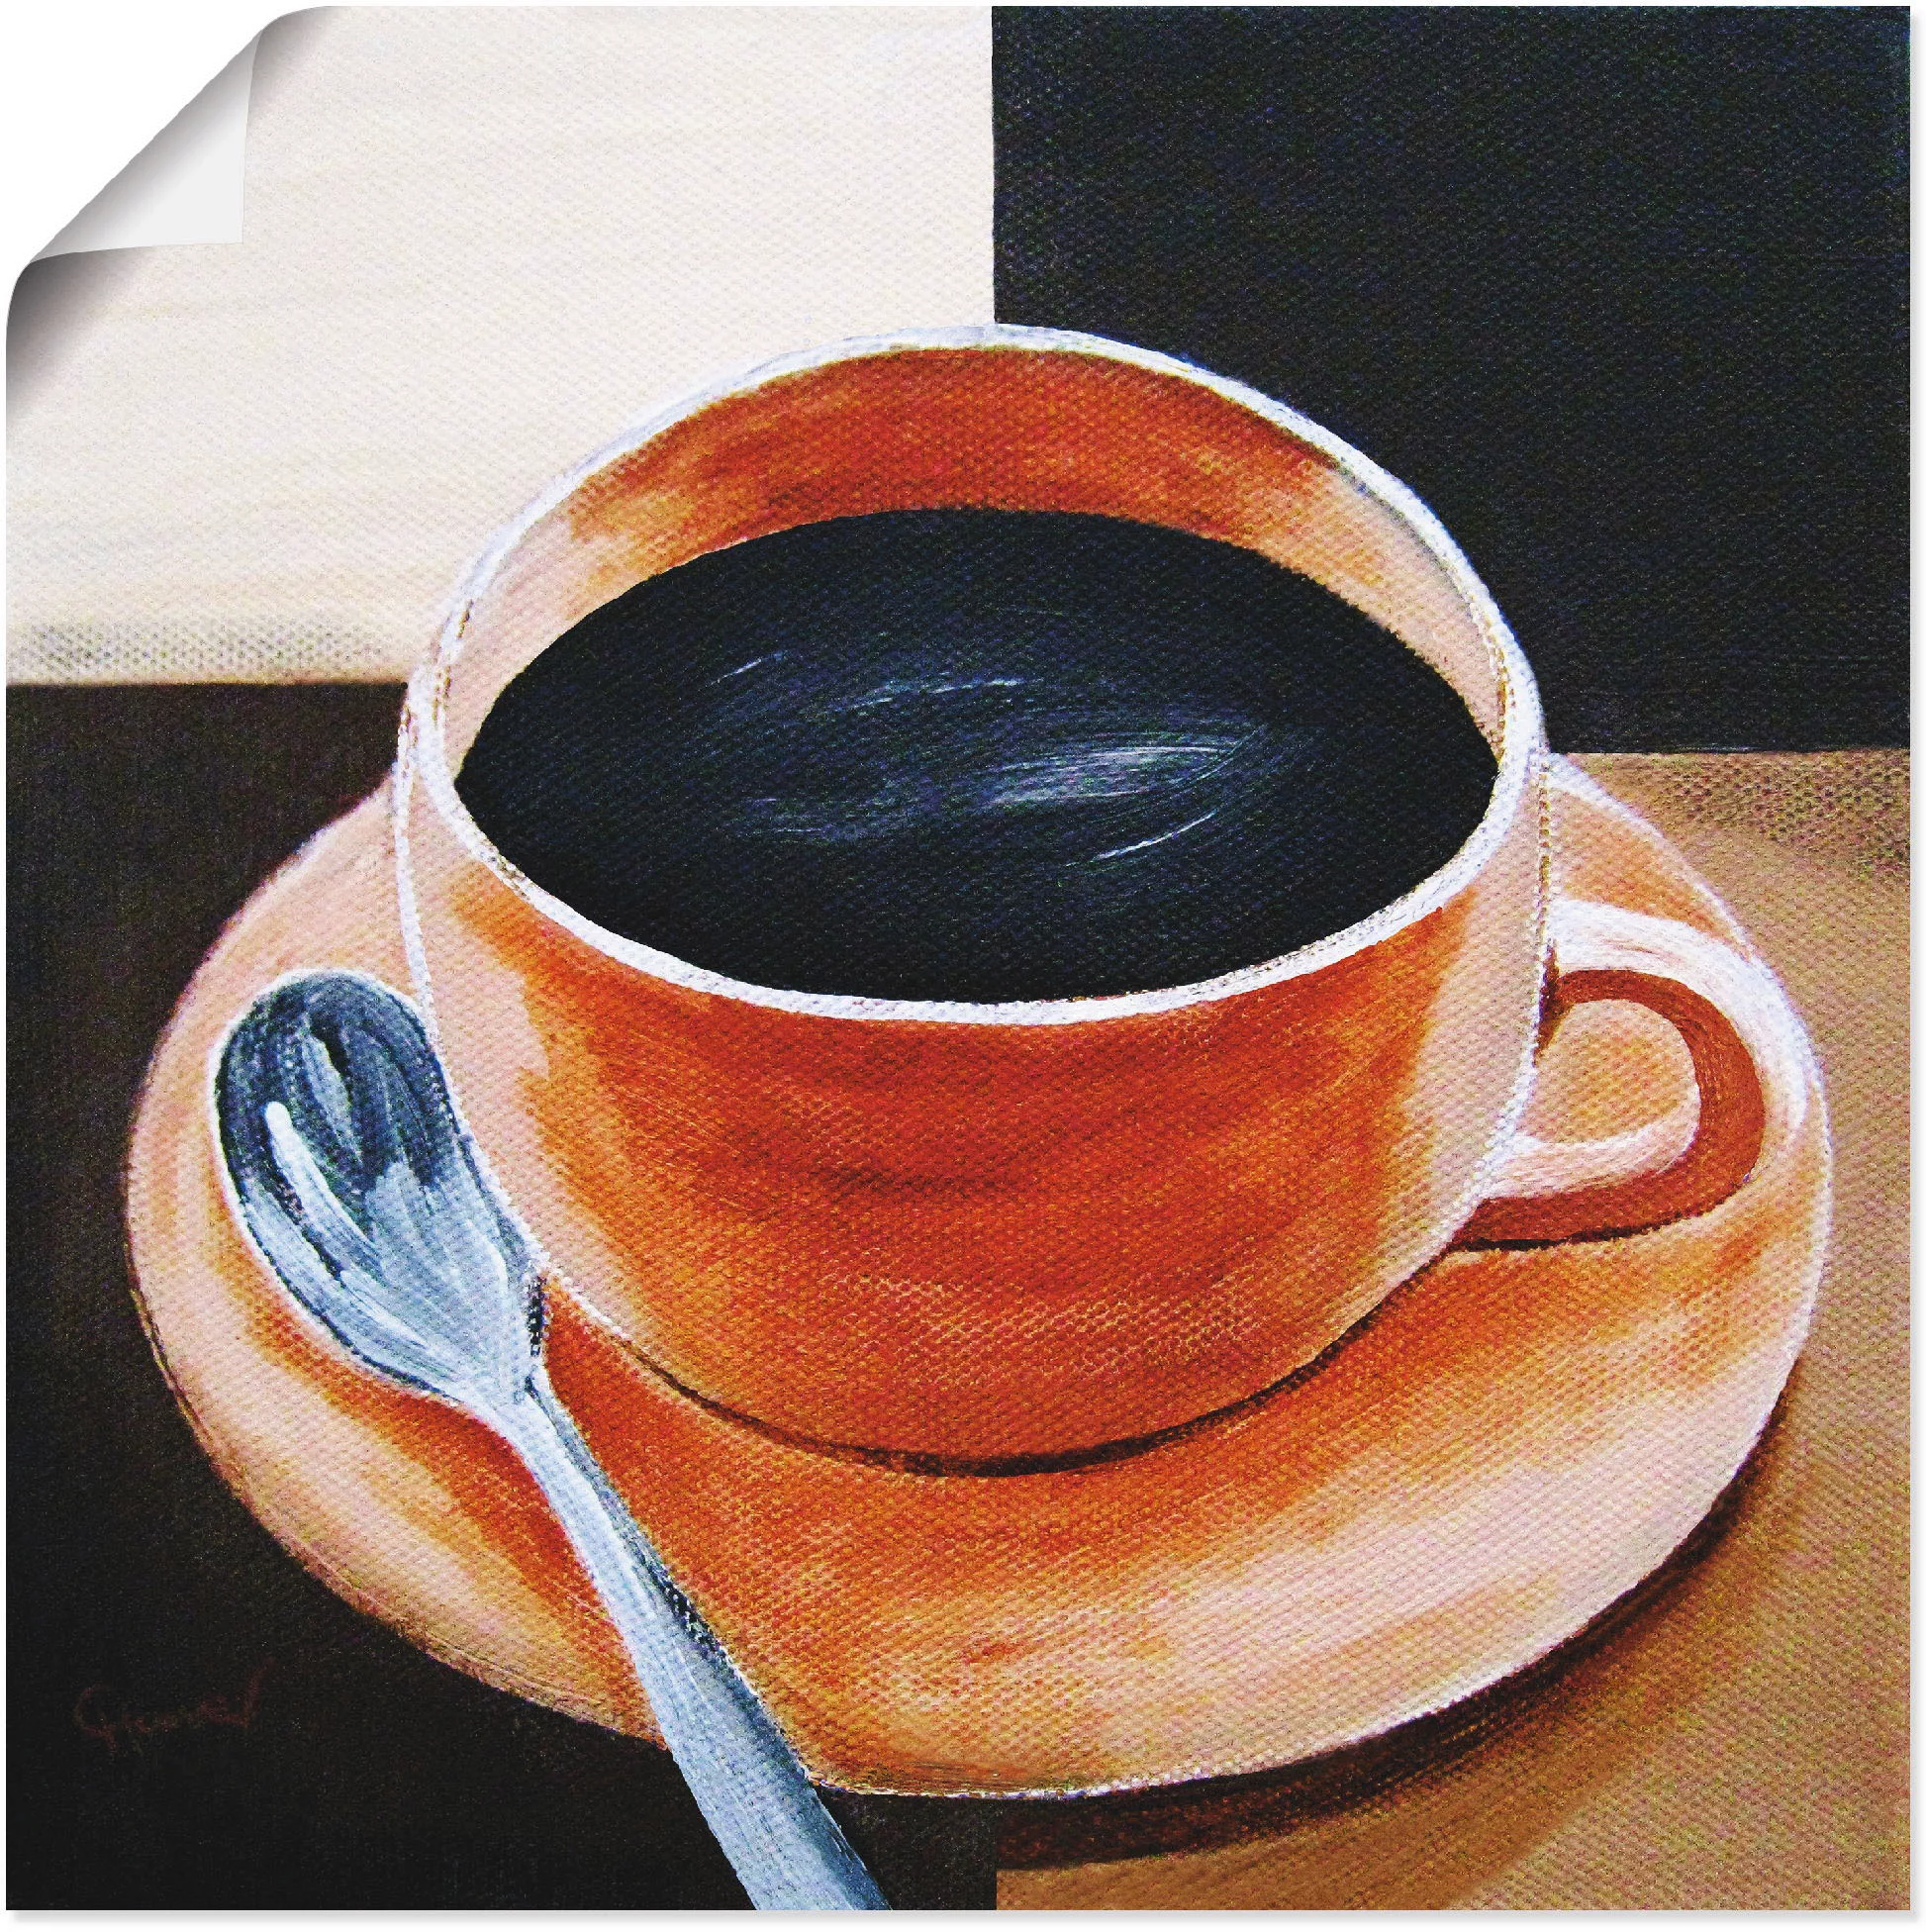 Artland Wandbild »Kaffee«, Getränke, (1 St.), als Leinwandbild, Poster in v günstig online kaufen